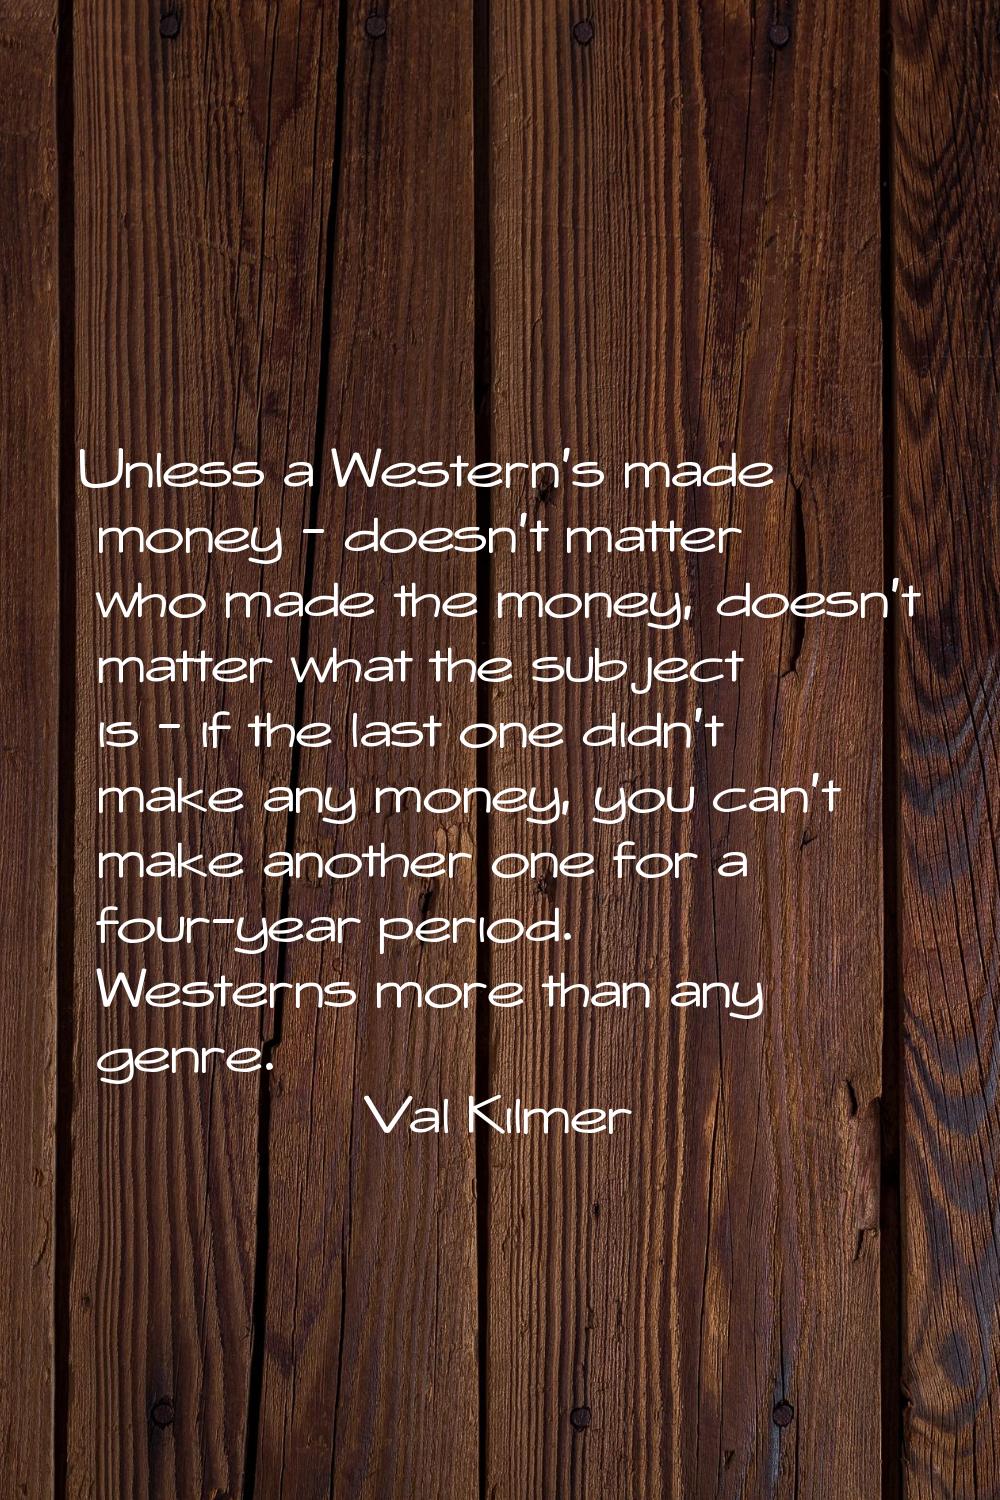 Unless a Western's made money - doesn't matter who made the money, doesn't matter what the subject 